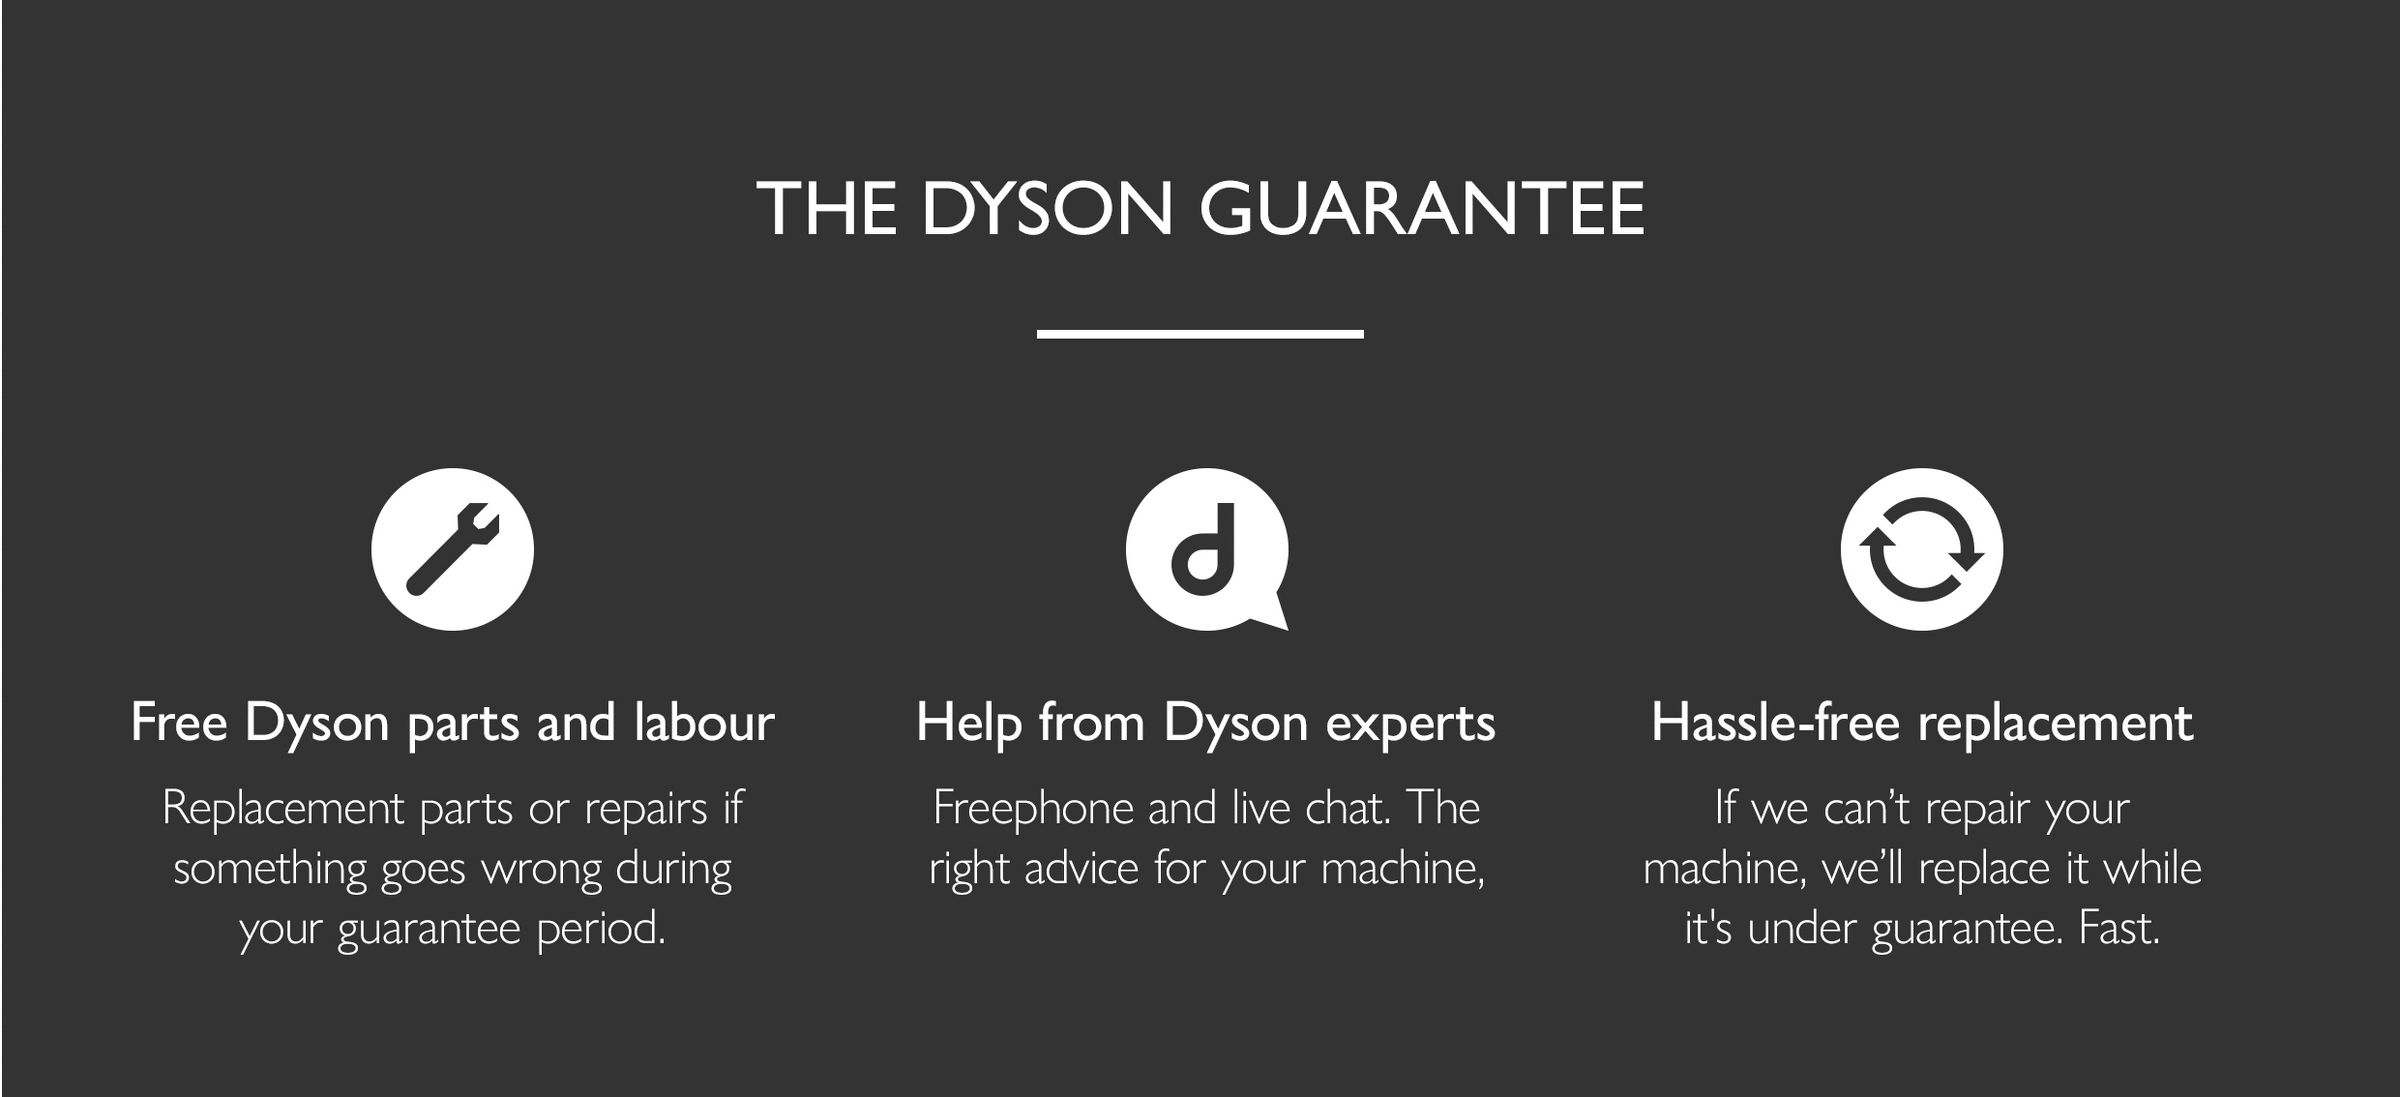 The Dyson guarantee